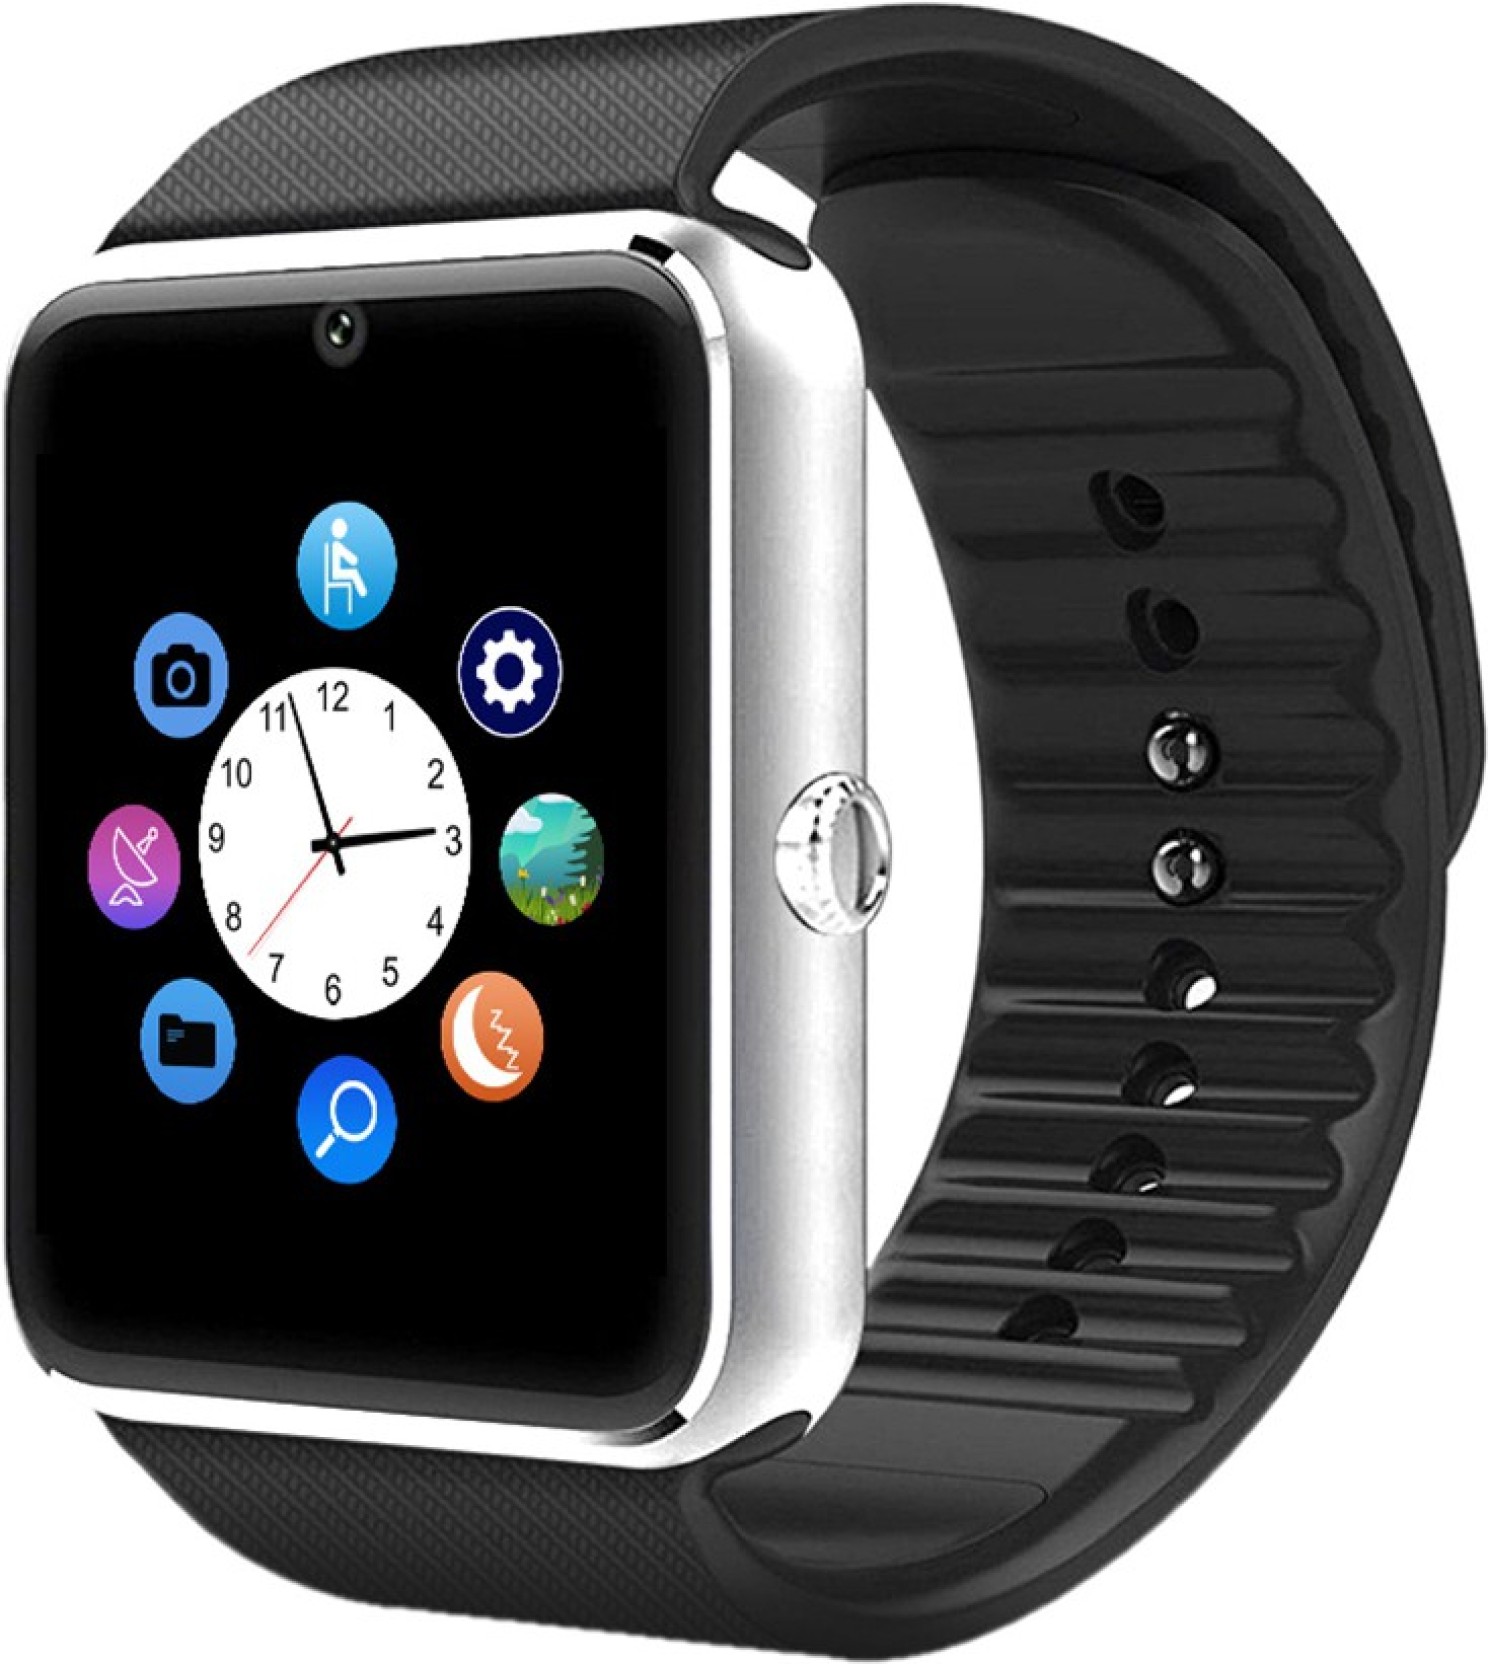 Смарт часы watch x6. Часы смарт вотч 8. Часы смарт вотч gt08. Смарт-часы gt08 (черный). Smart watch Smart gt08.